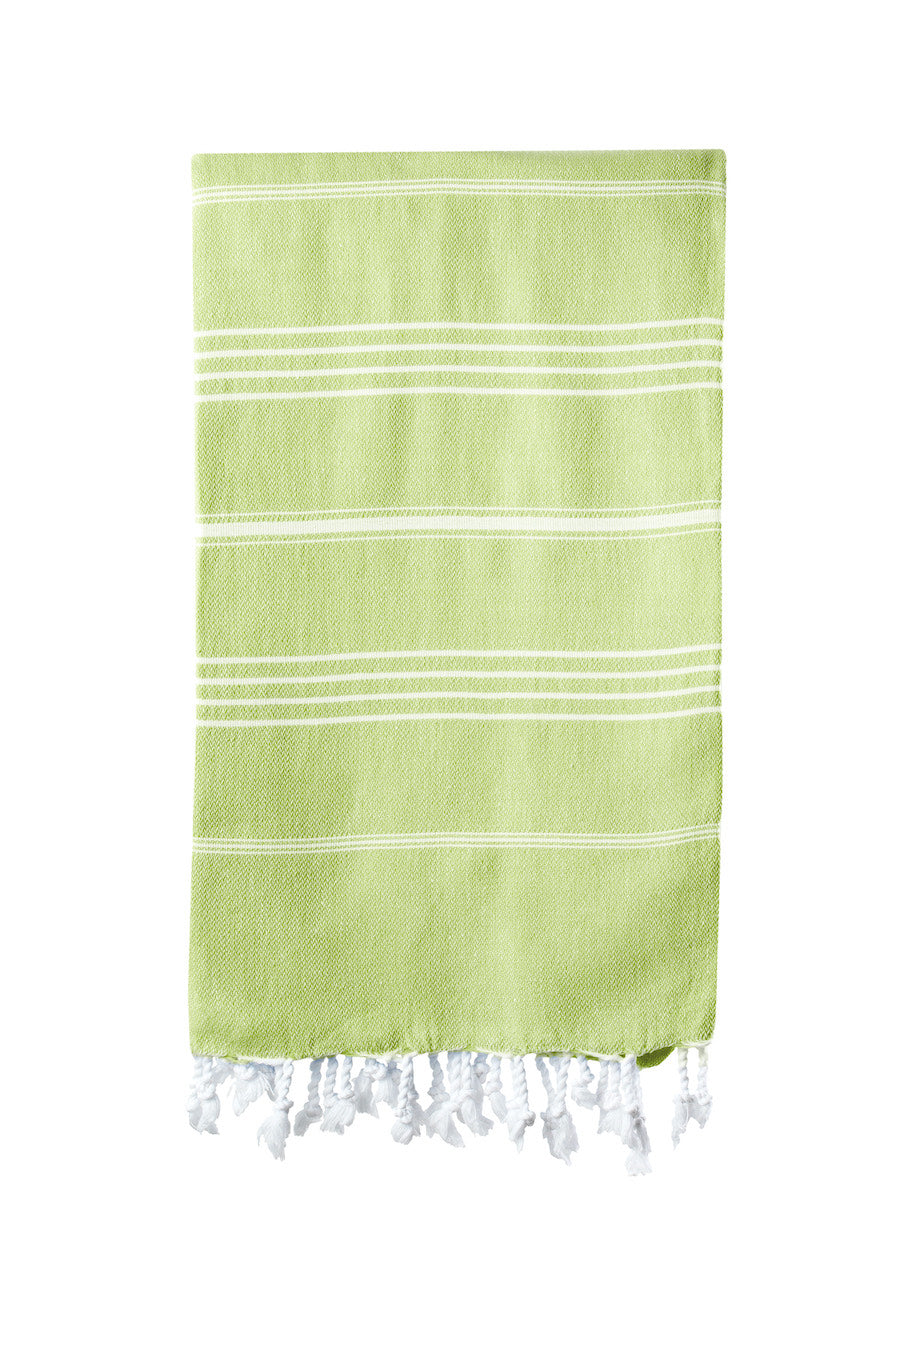 Elim Lime Green Turkish Towel